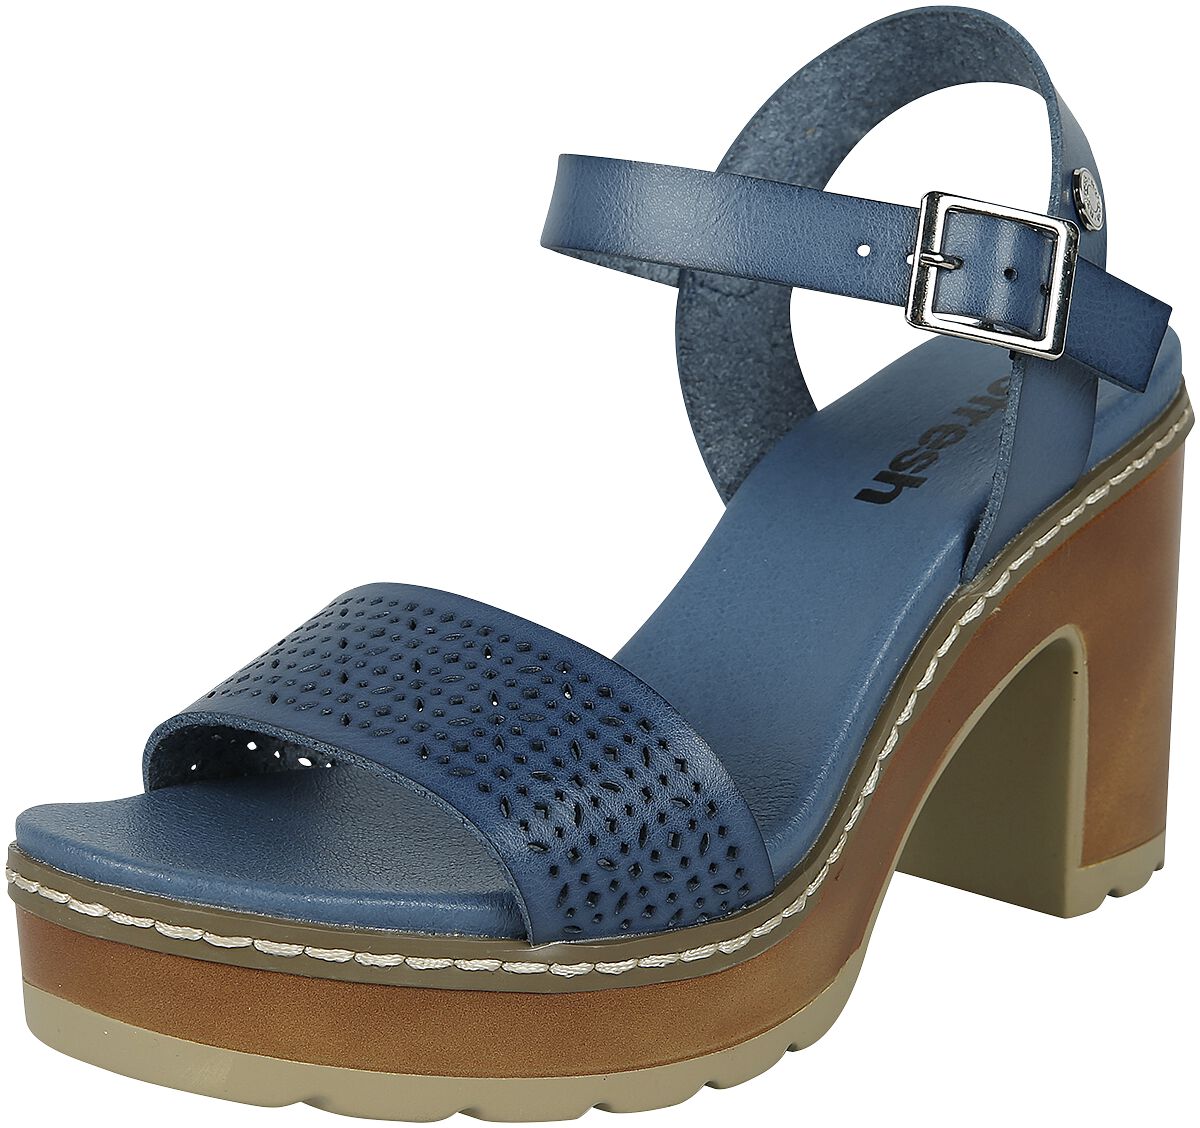 Tongs Rockabilly de Refresh - High Heel Sandale - EU36 à EU41 - pour Femme - bleu